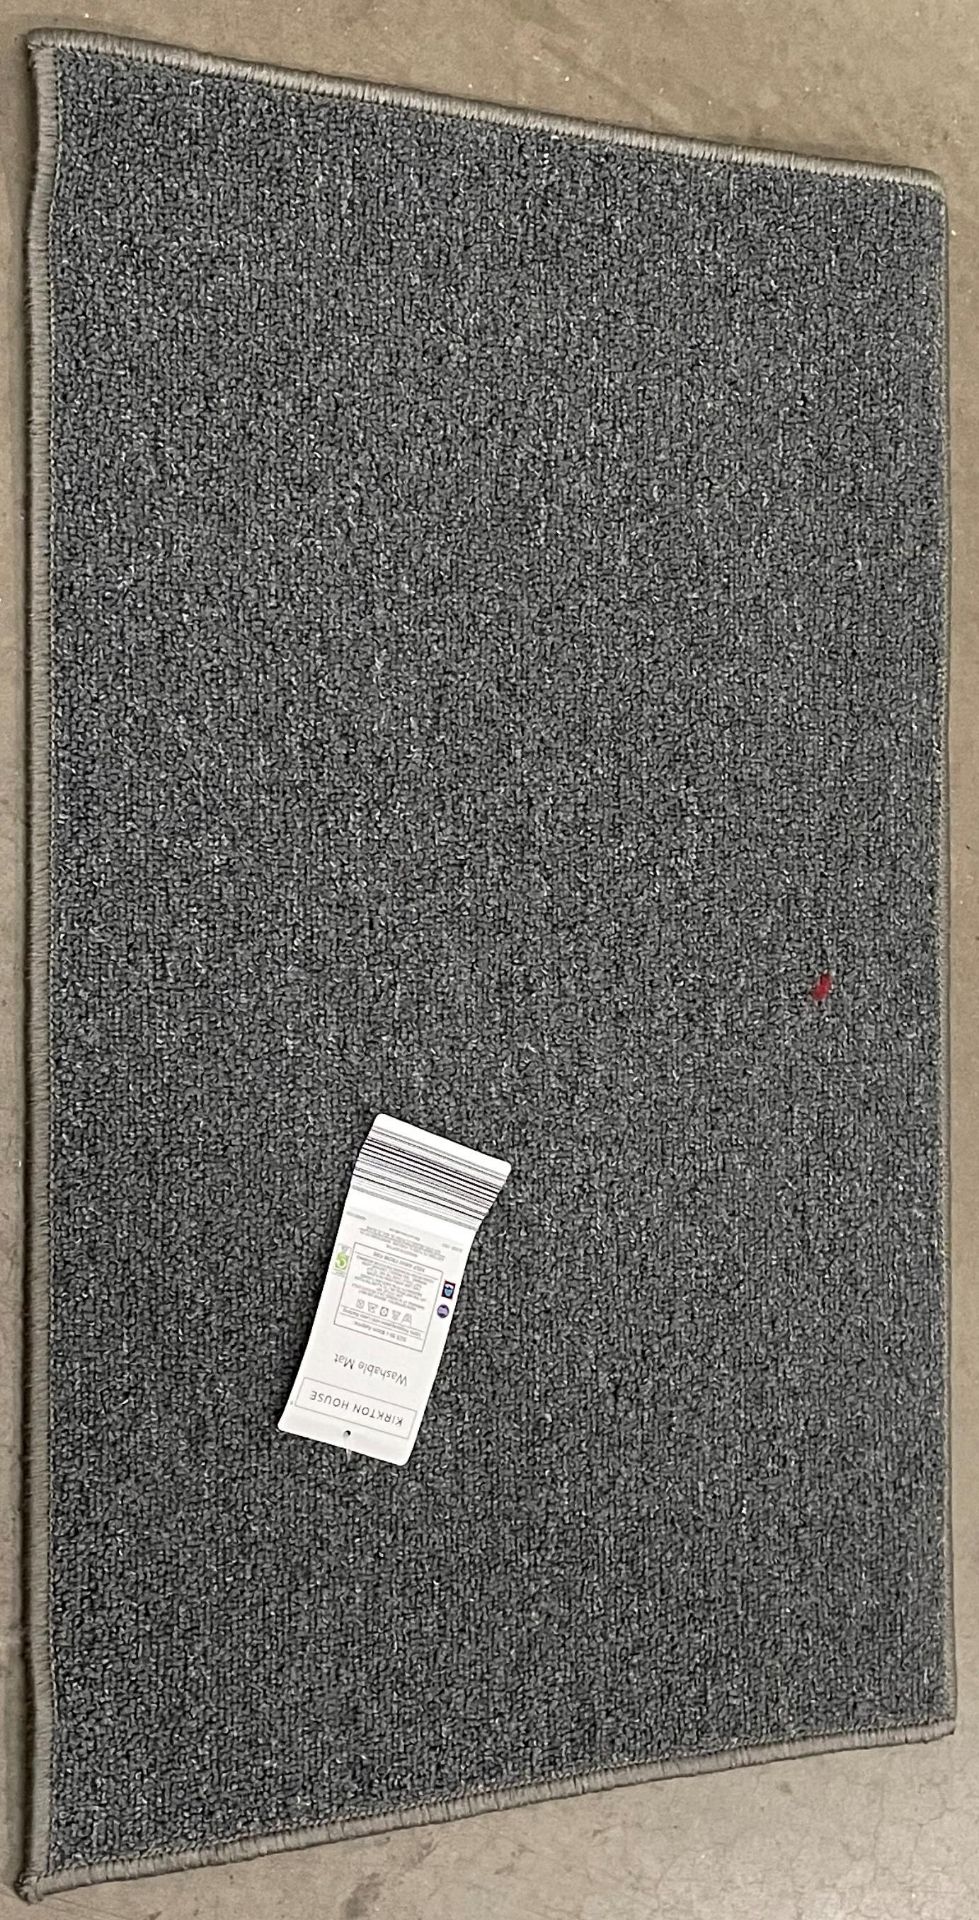 100 x Kirkton House washable mats 50 x 80cm (5 outer packs) (saleroom location: Blinds area)